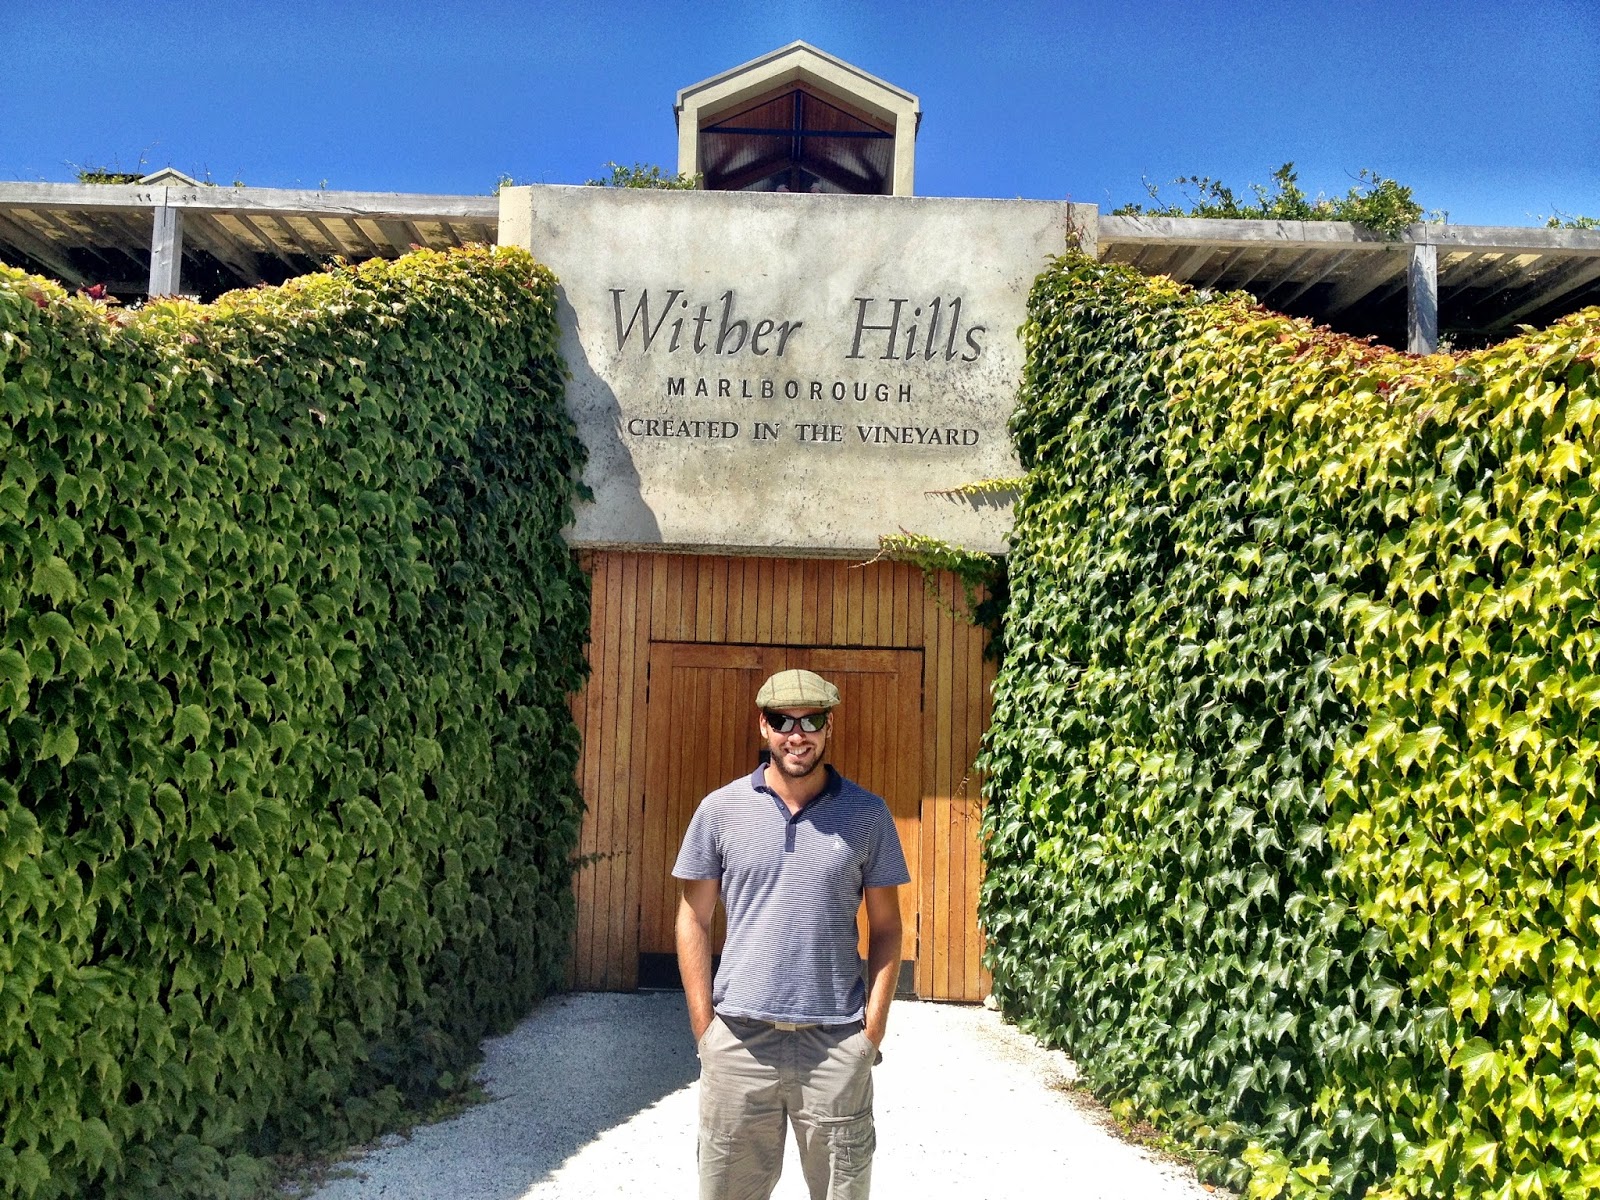 Outside Wither Hills vineyard, Marlborough, New Zealand